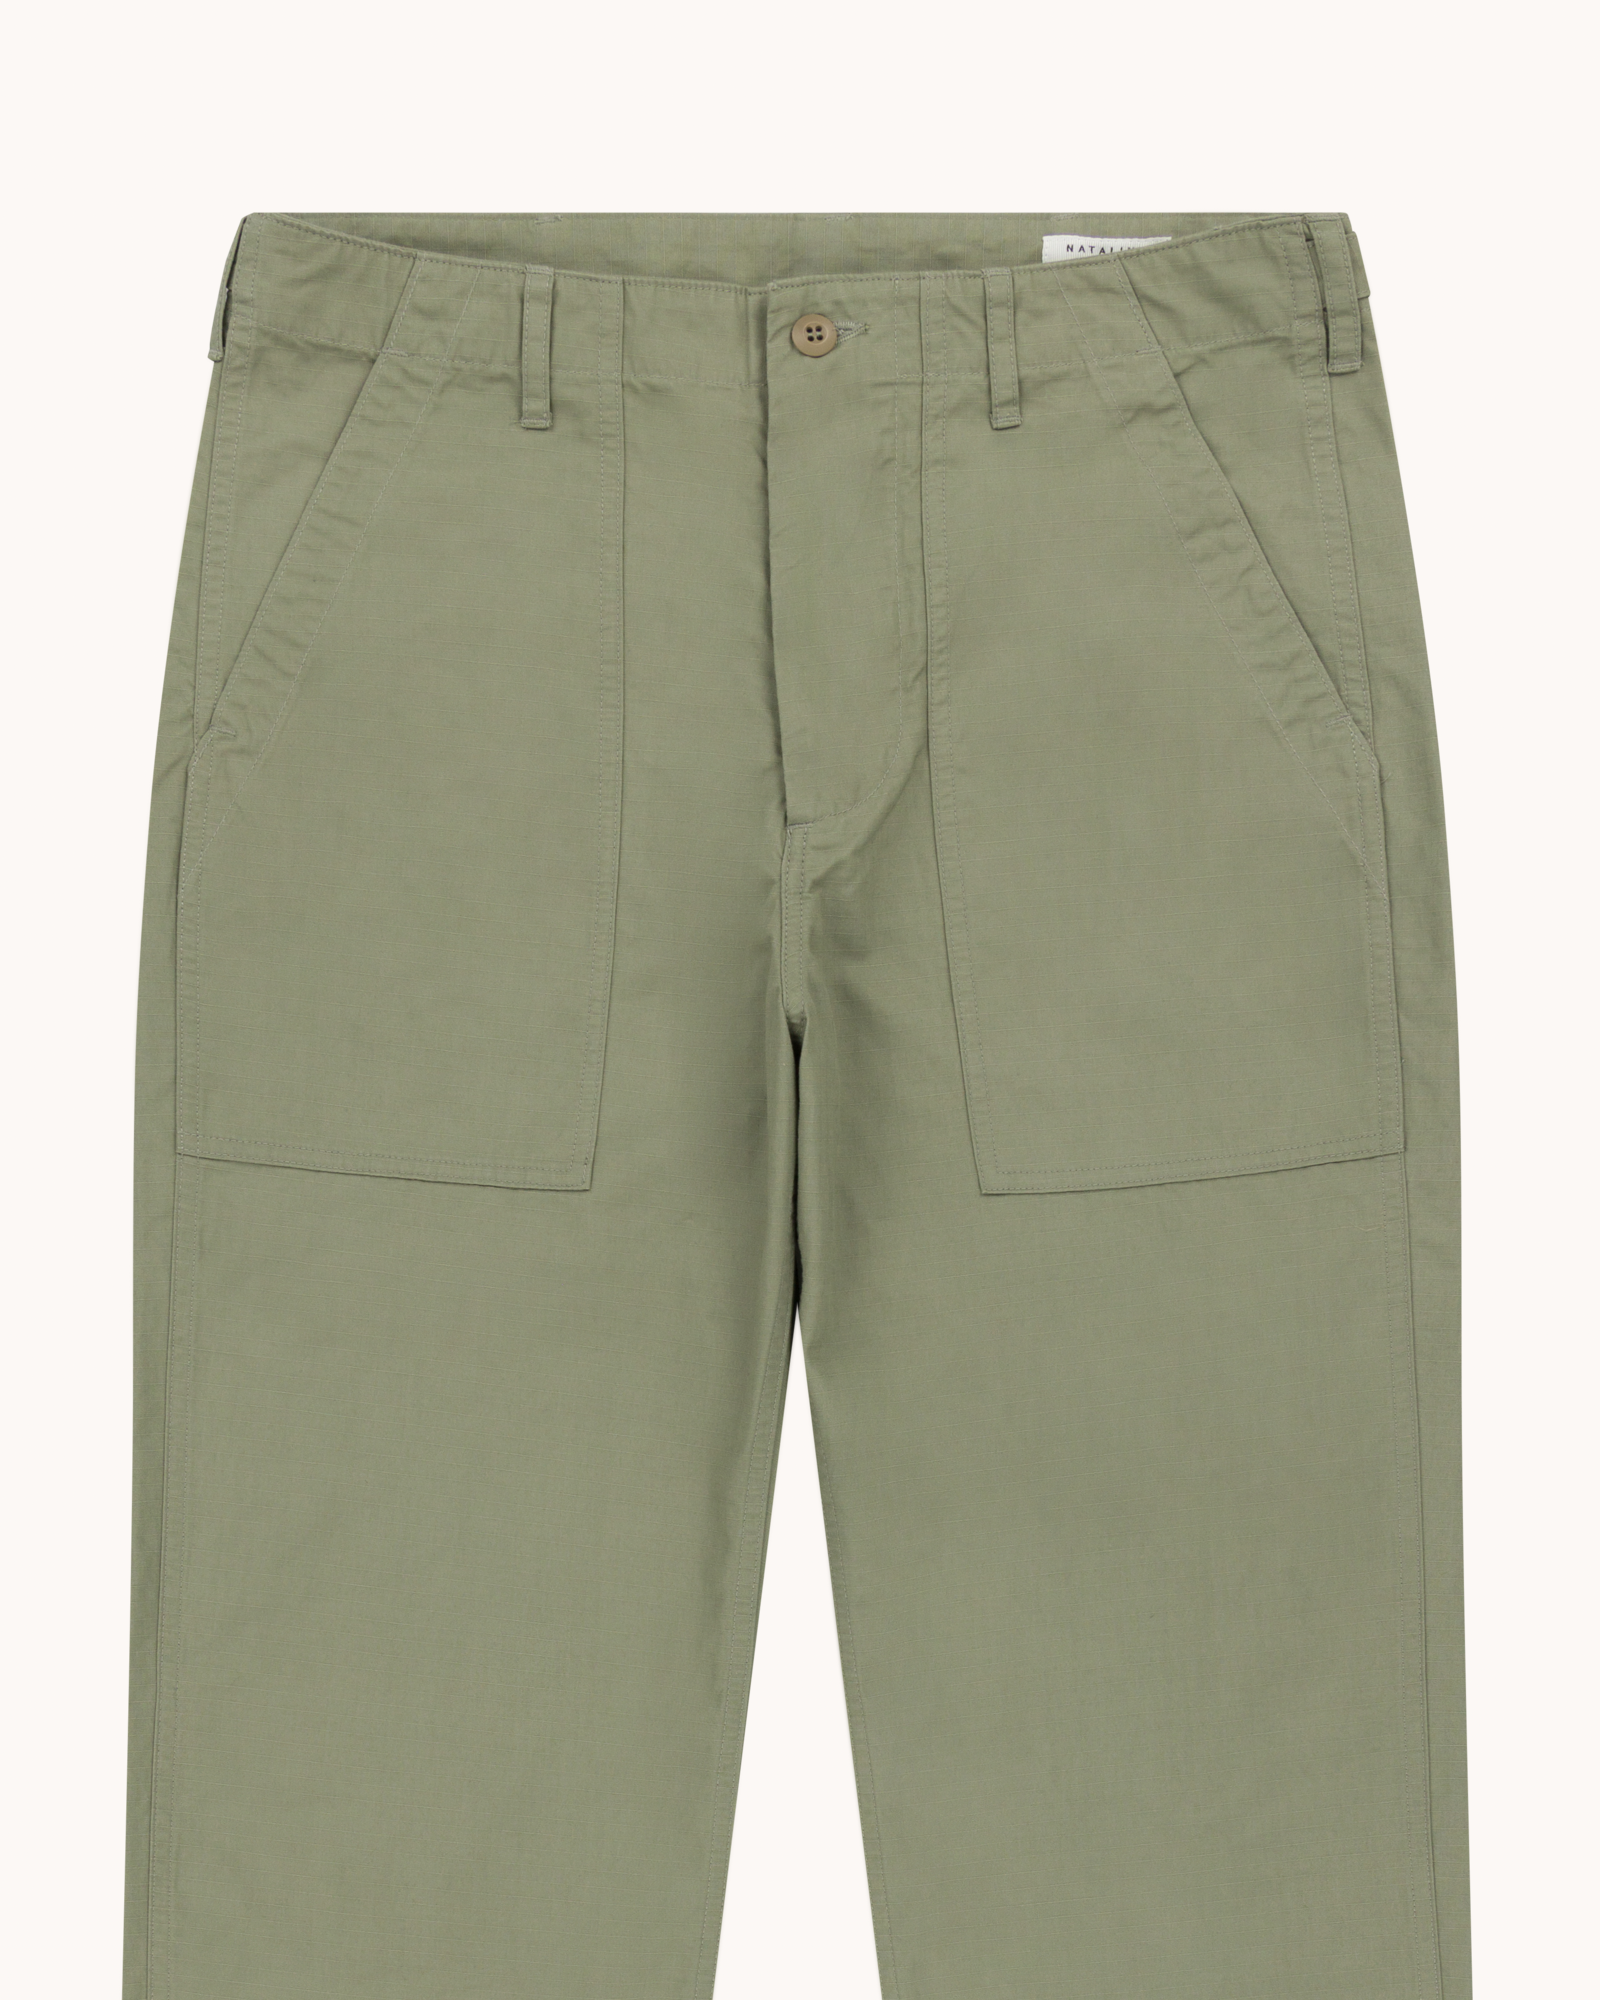 GYMSHARK Leggings Pants light olive green Size S Stretch NWT New | eBay